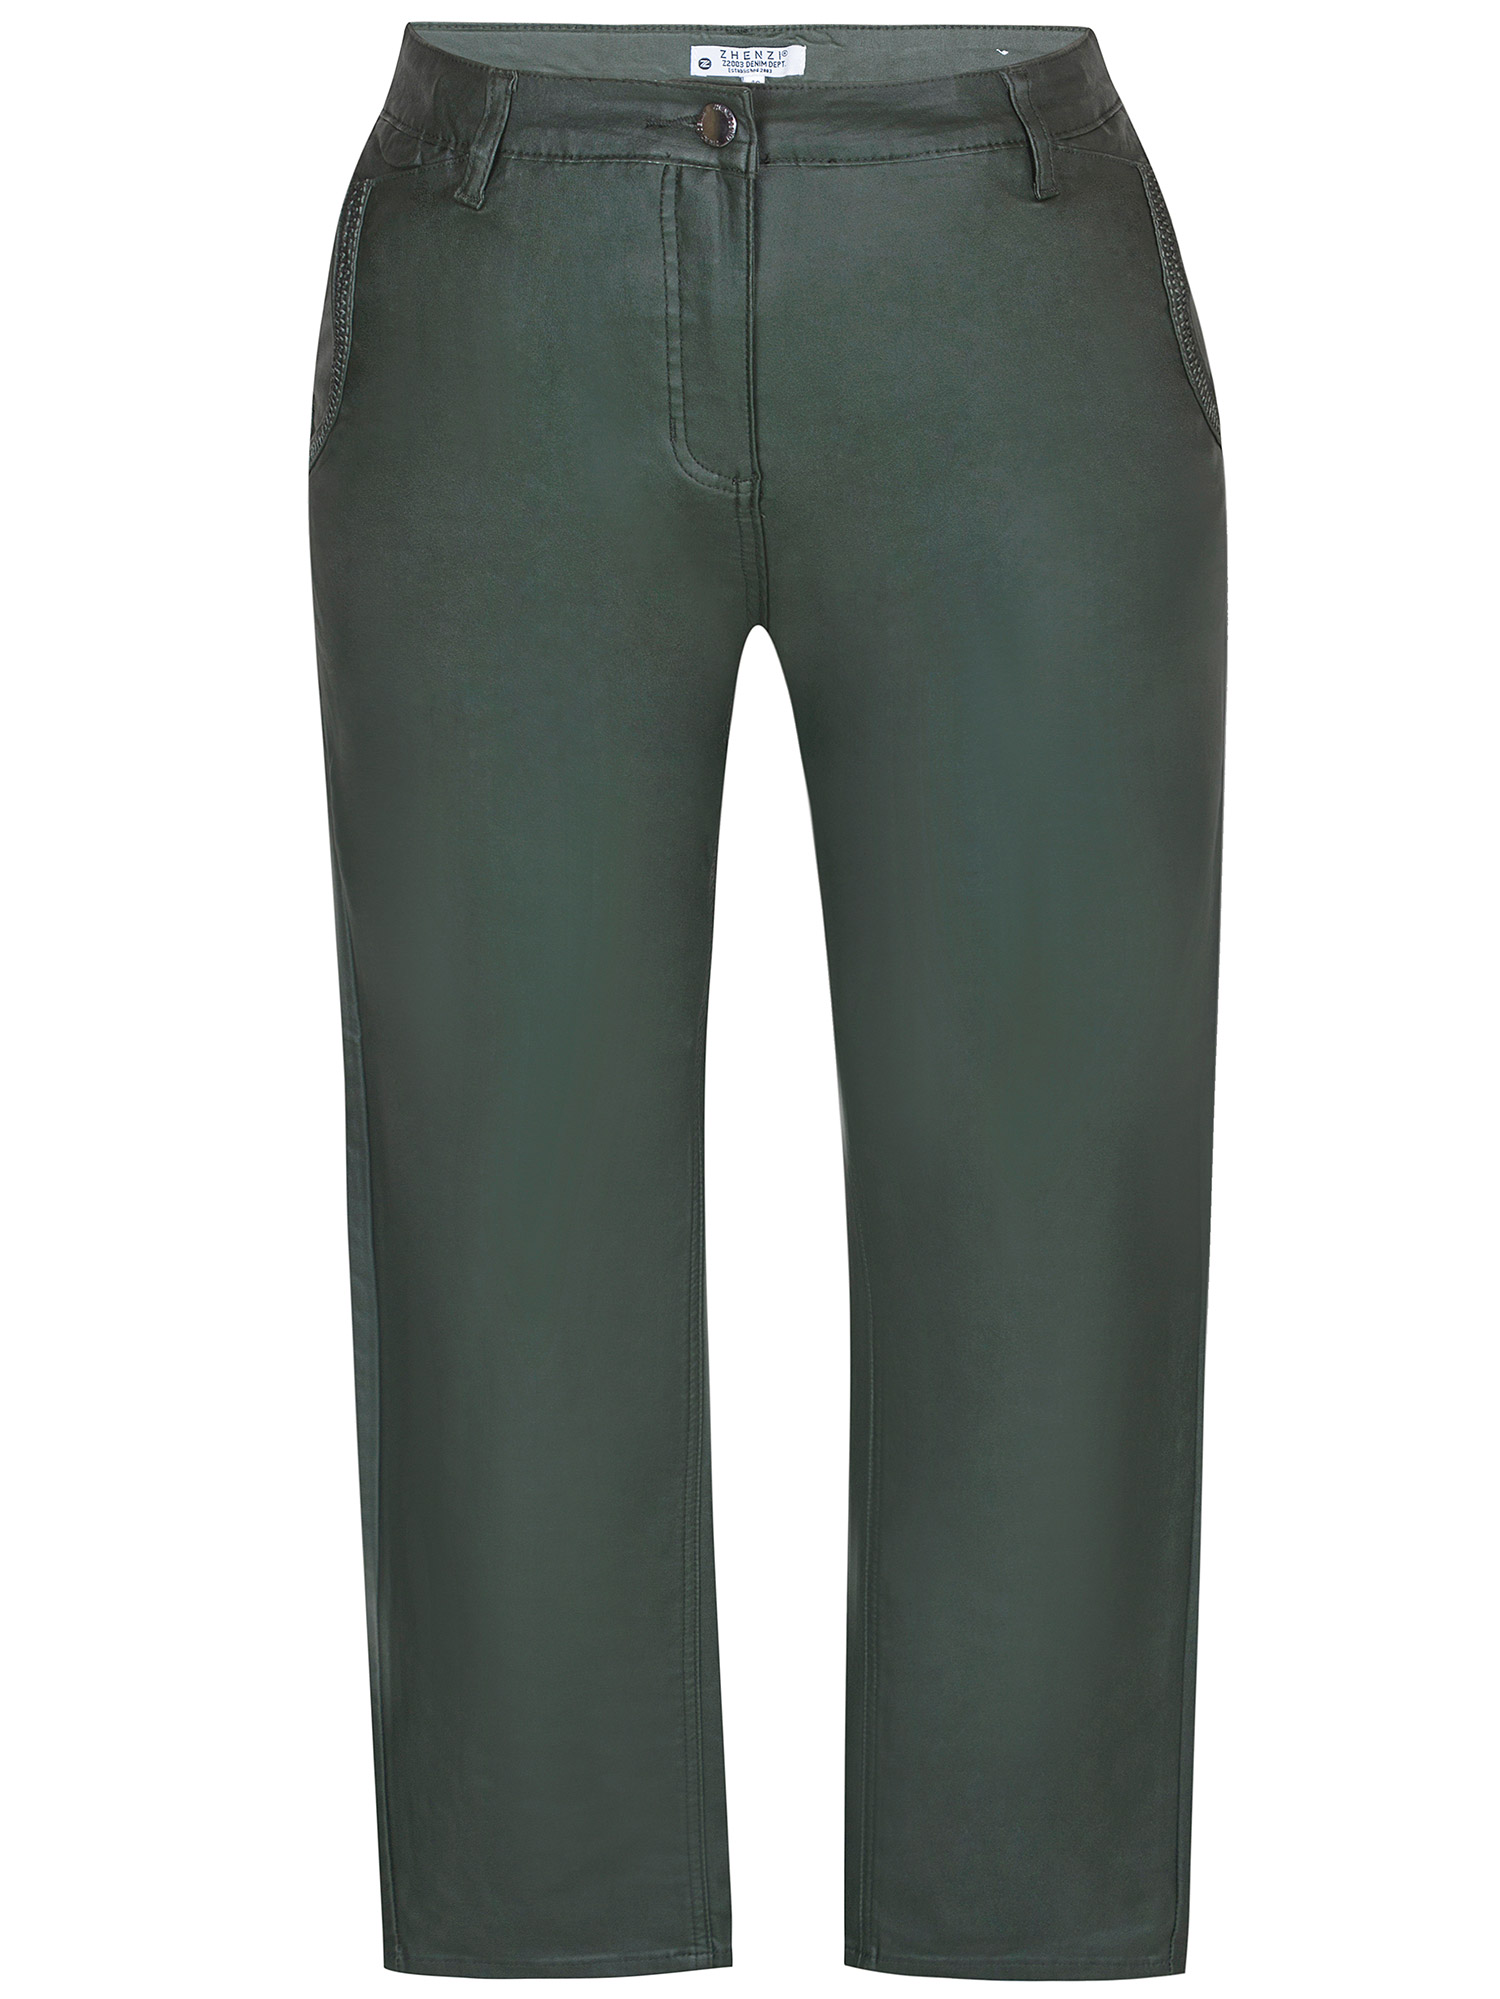 Salsa - Lækre grønne strækbar bukser i læder look fra Zhenzi